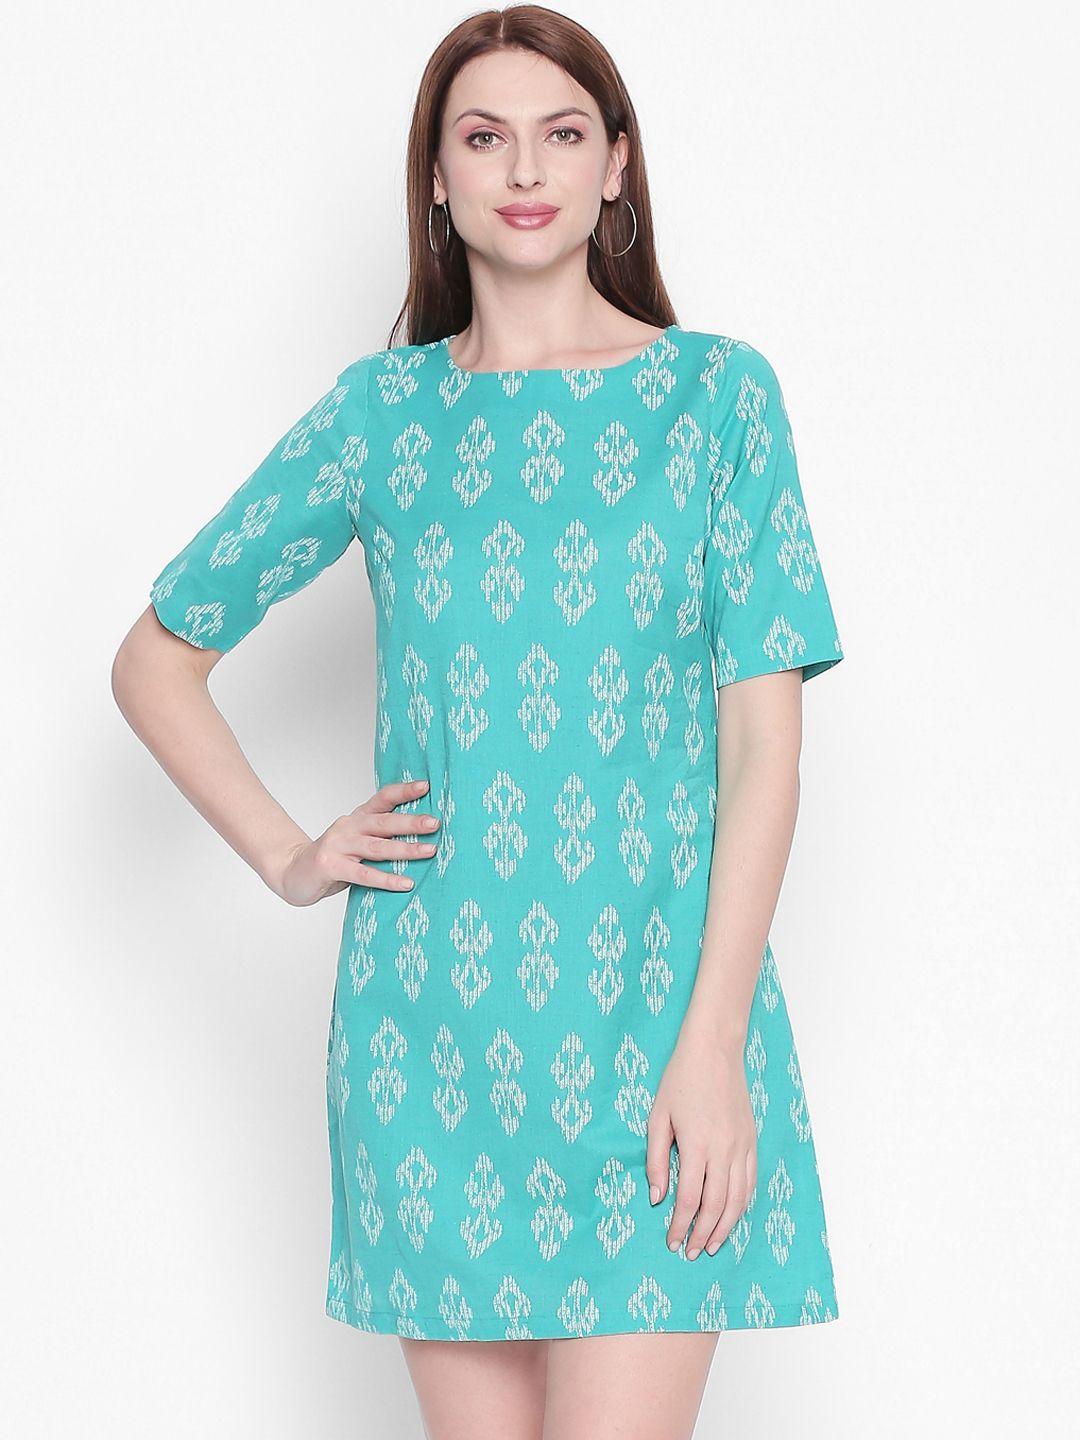 akkriti by pantaloons women turquoise blue printed a-line dress